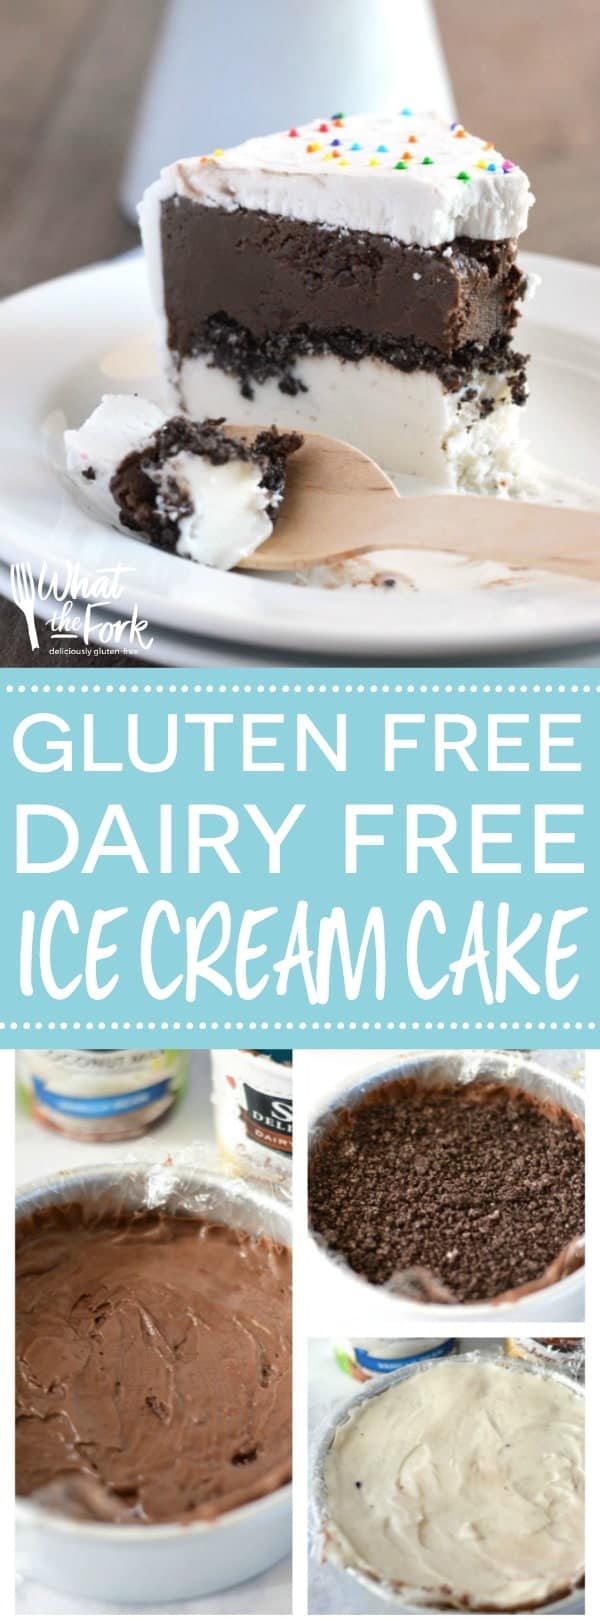 Gluten Free Dairy Free Freezer Cake